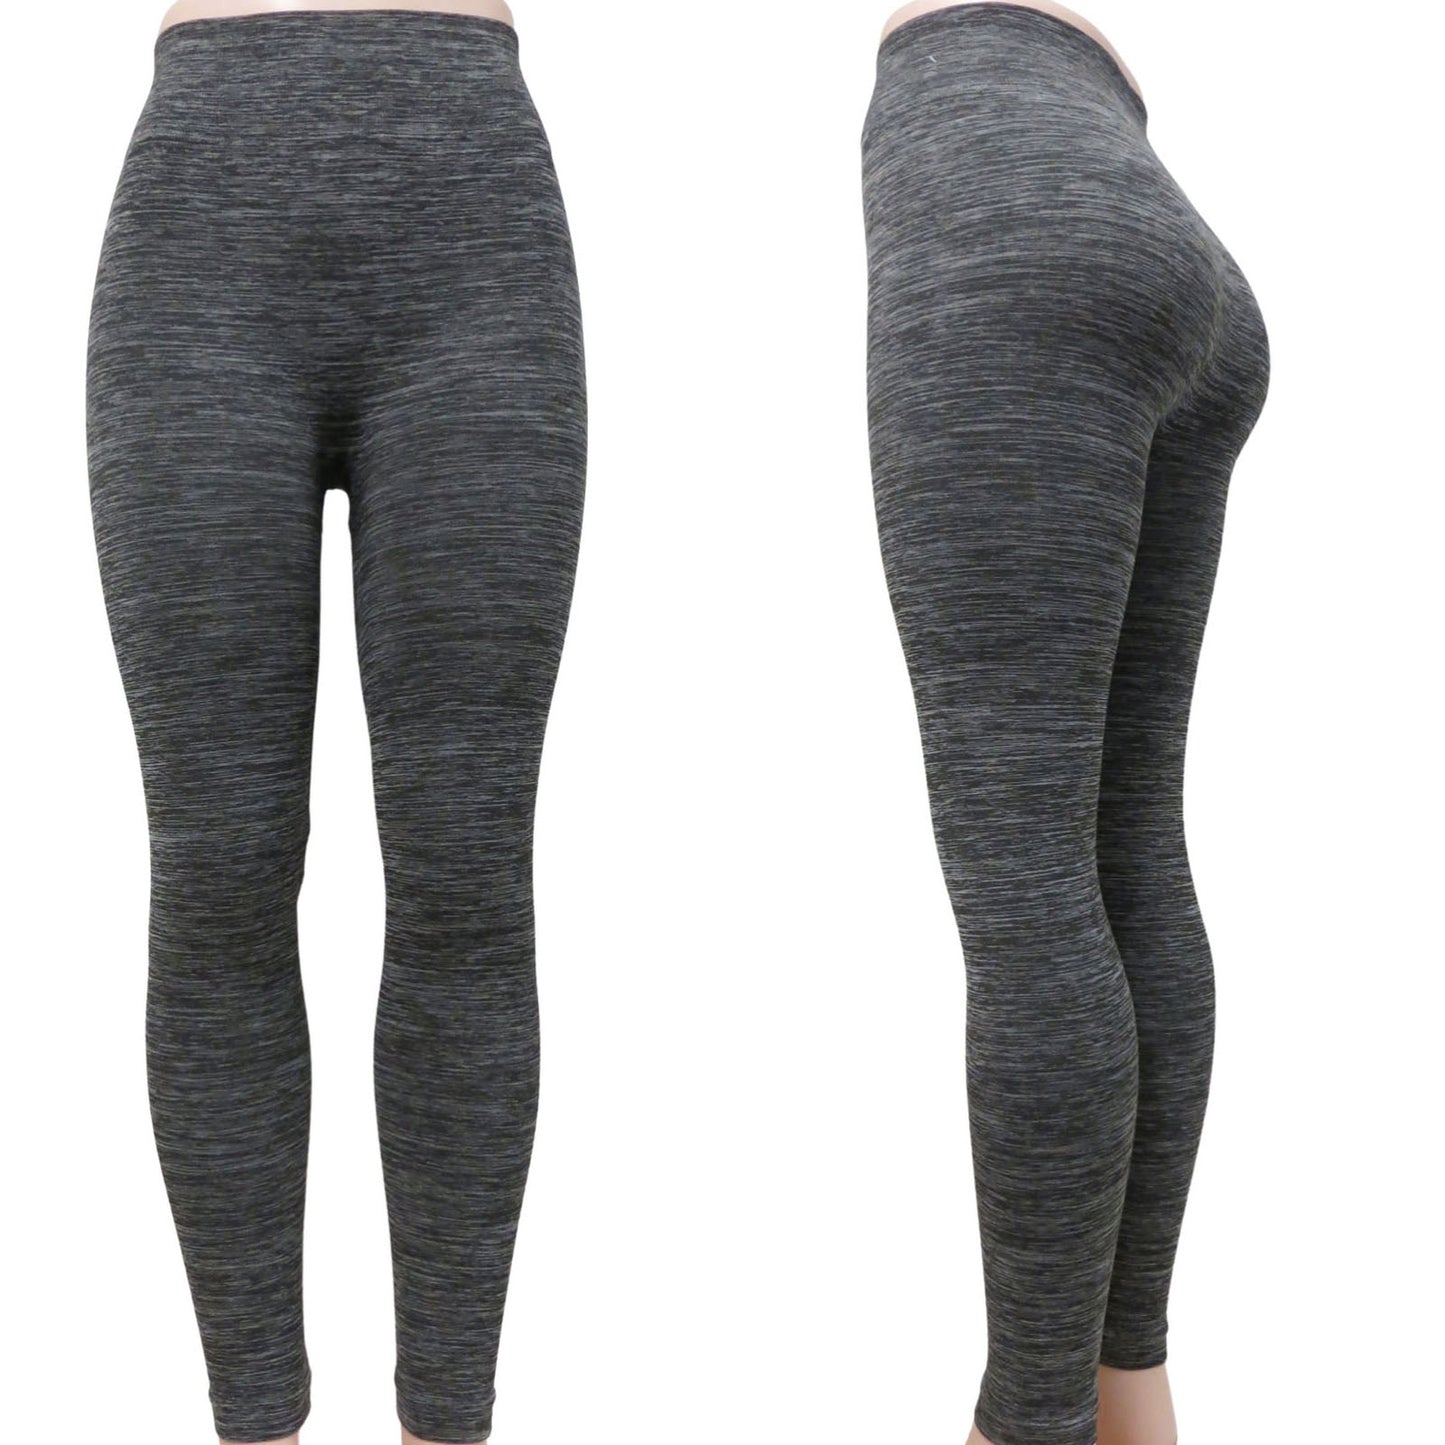 gray wholesale leggings in bulk space dye pattern full length